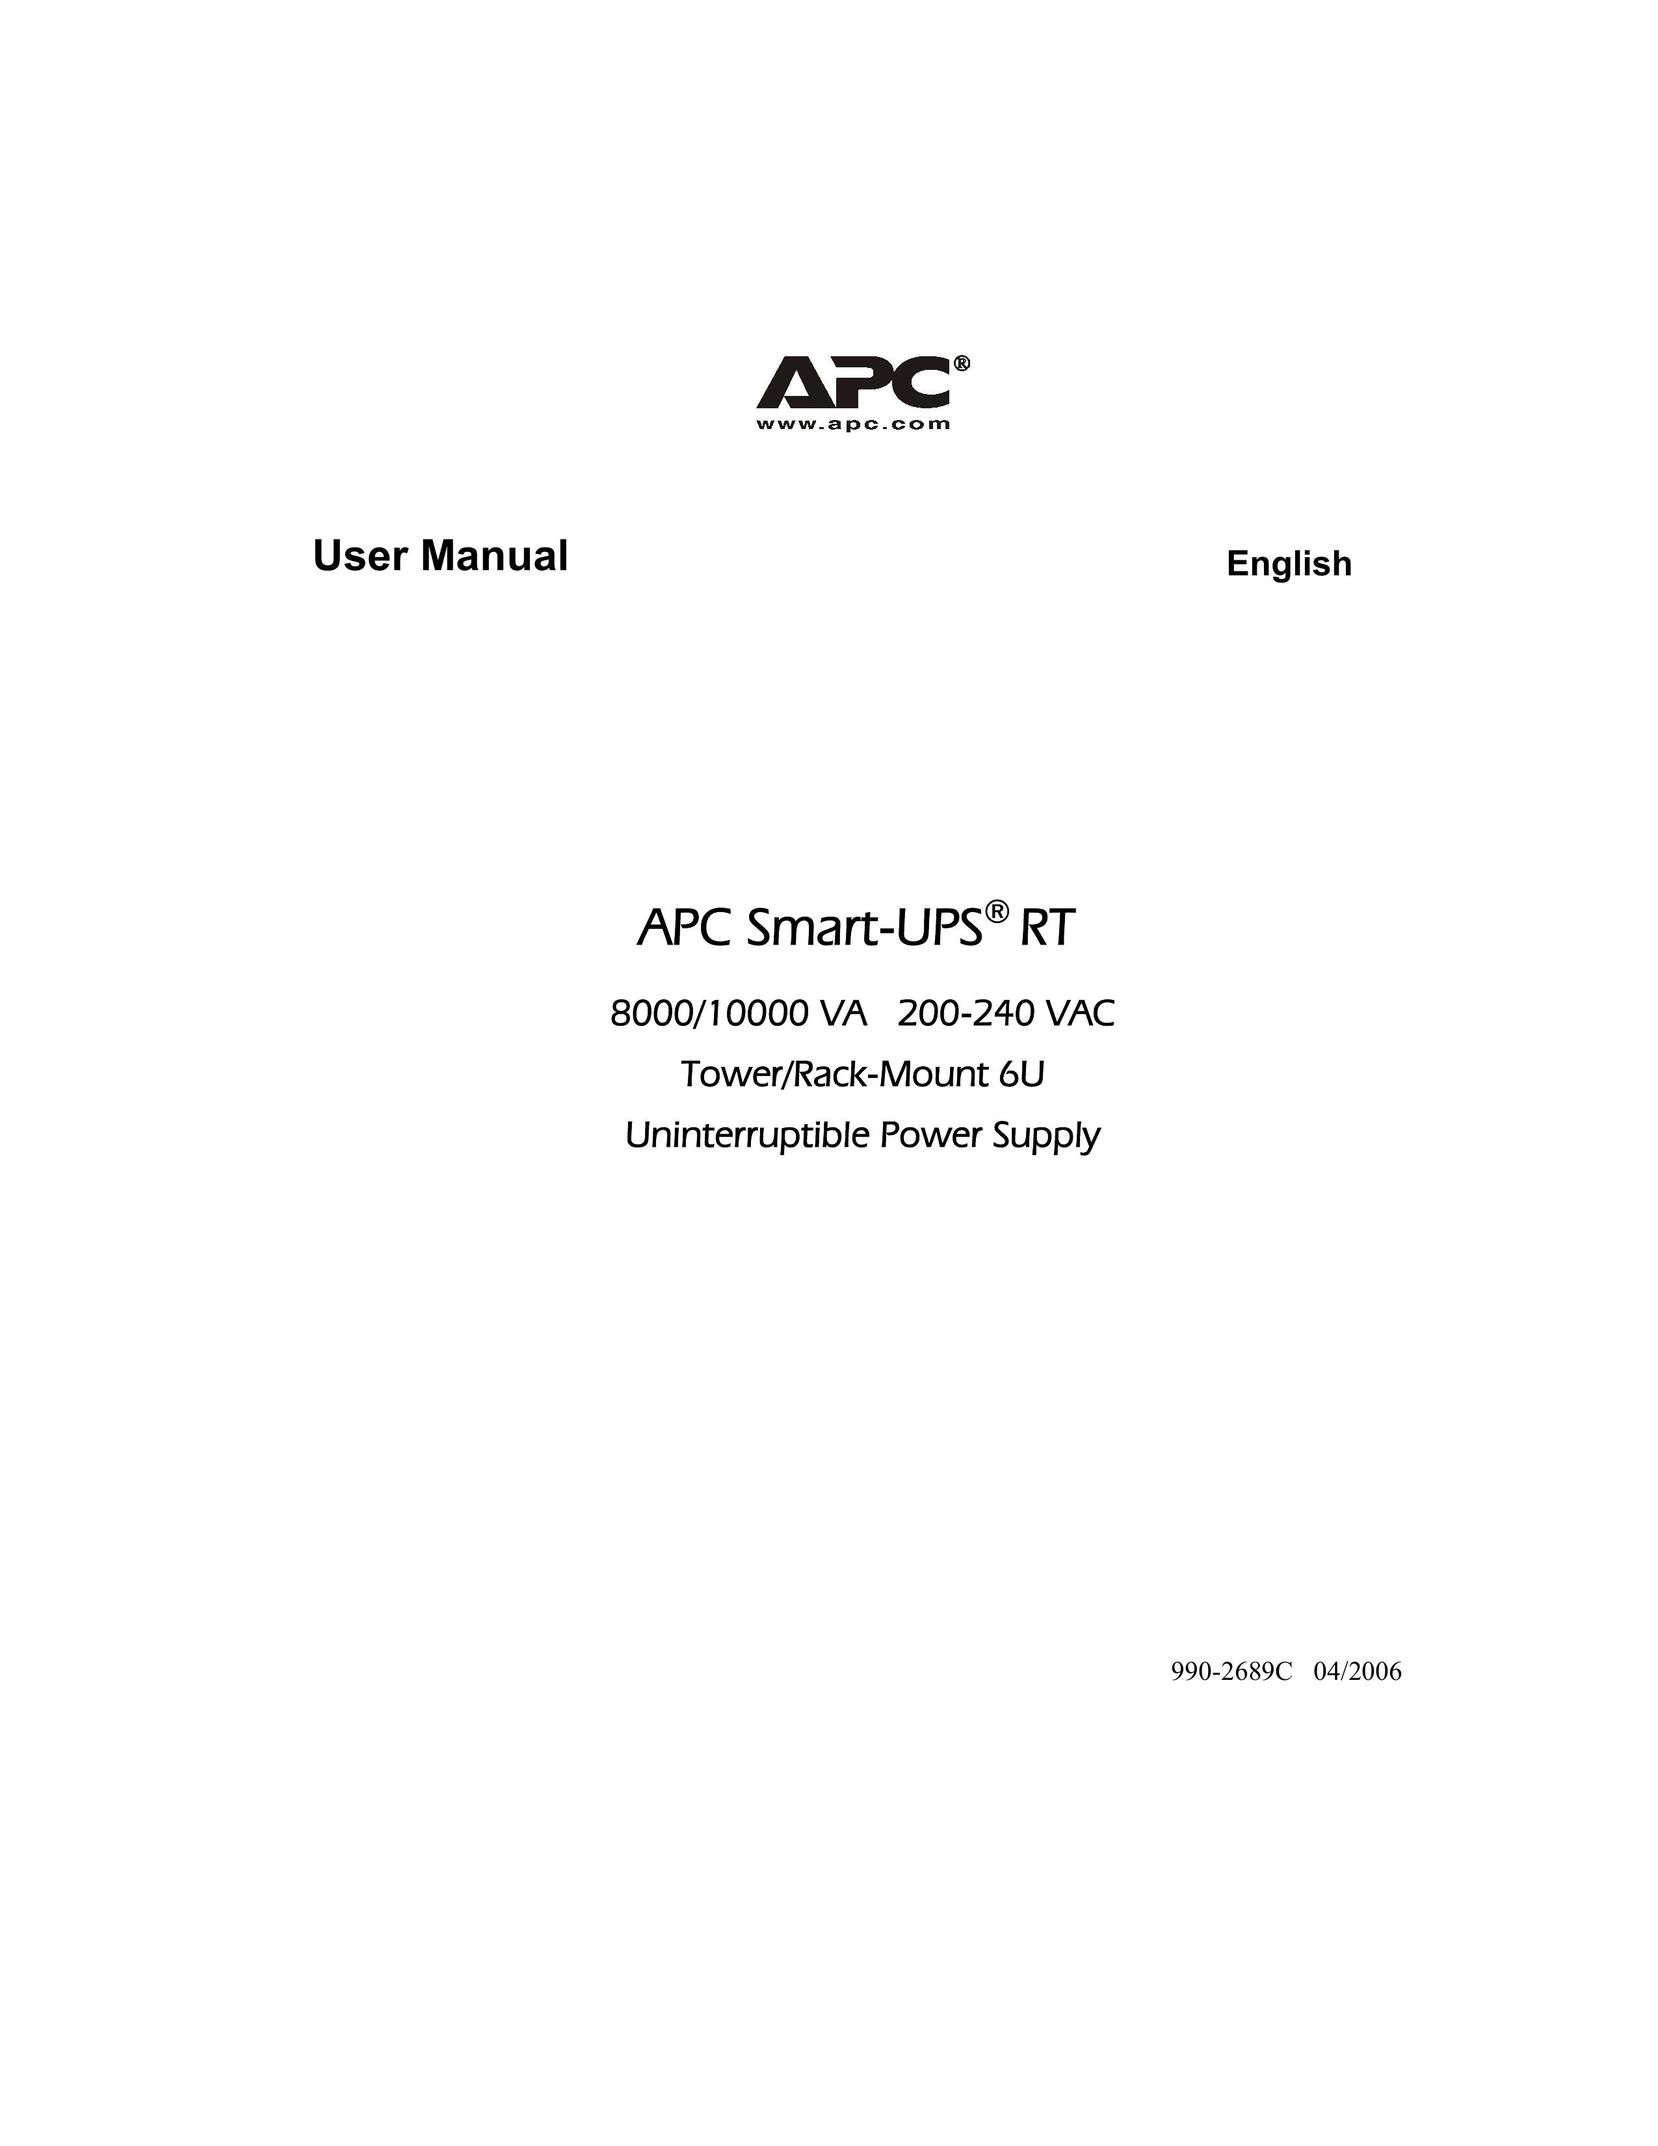 American Power Conversion 200-240 VAC Power Supply User Manual